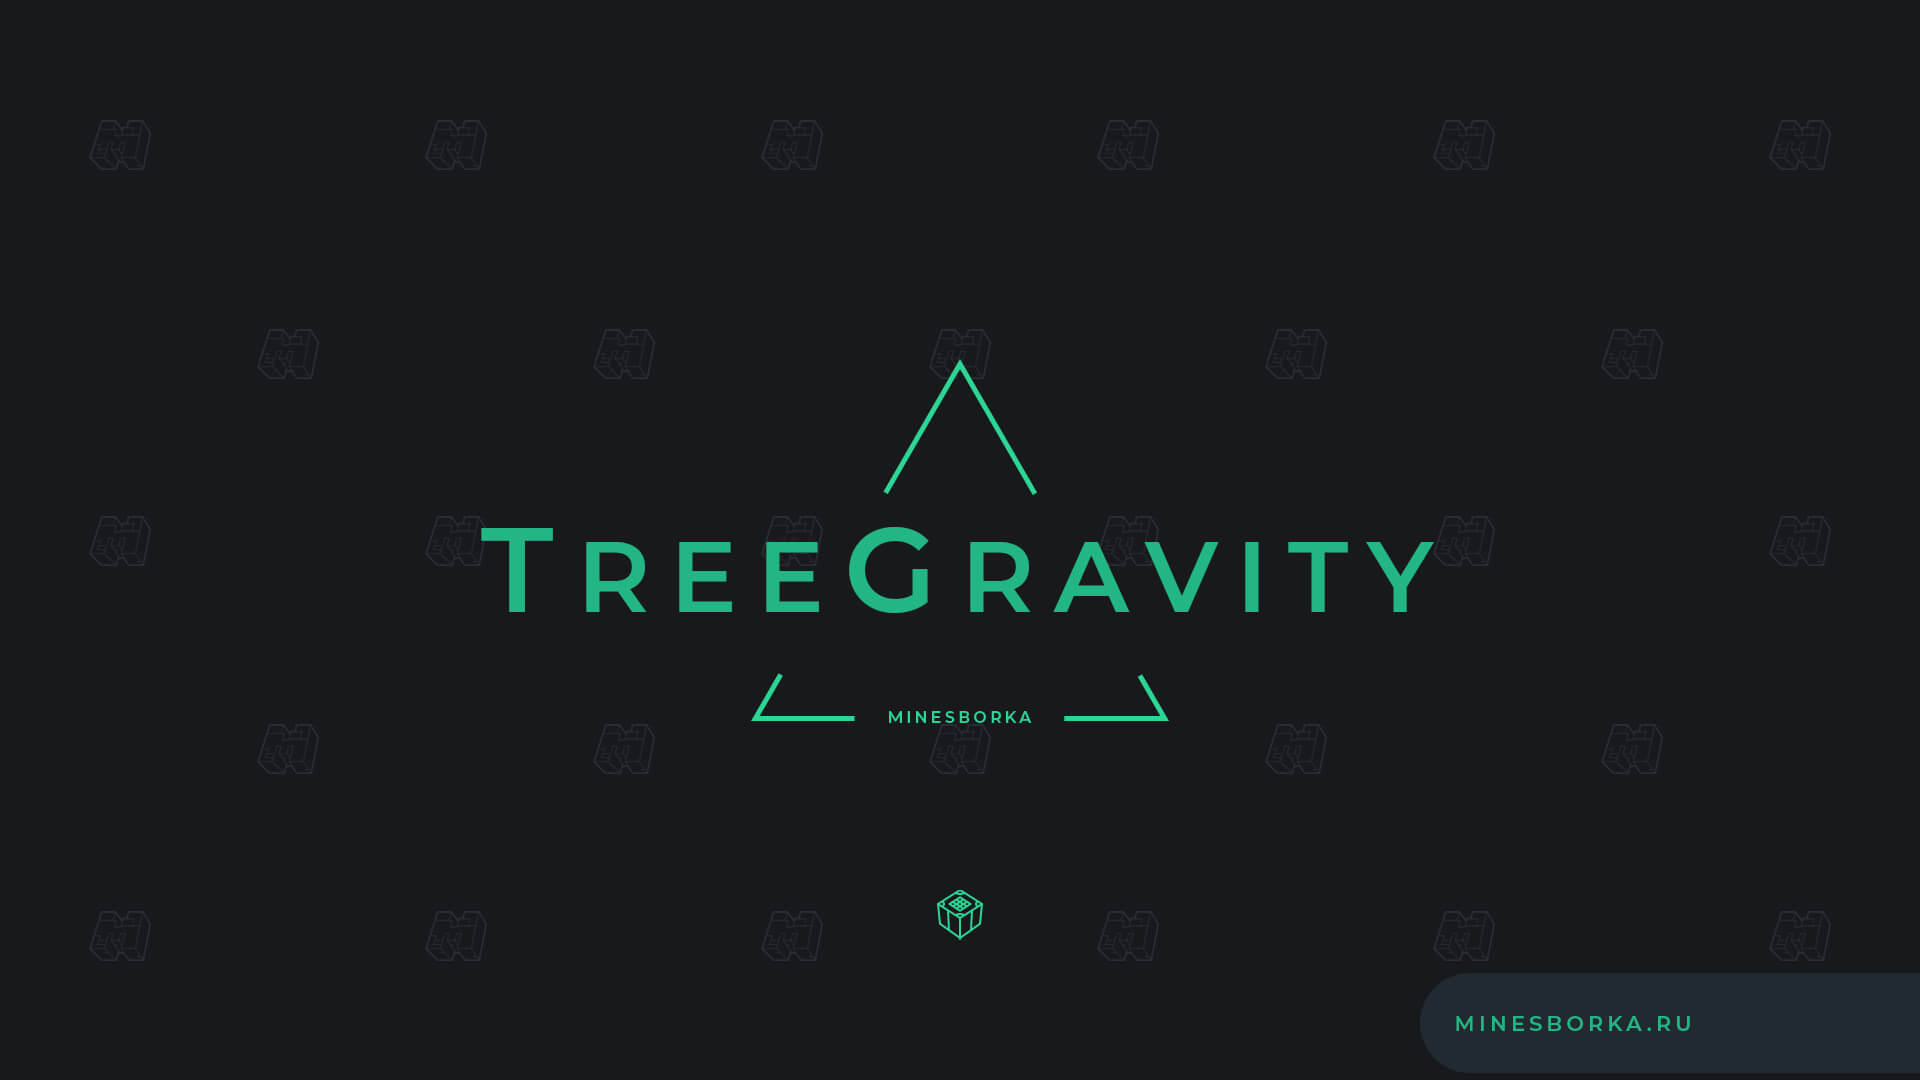 Плагин TreeGravity | Плагин для Minecraft на гравитацию для деревьев [1.16.4 - 1.8]